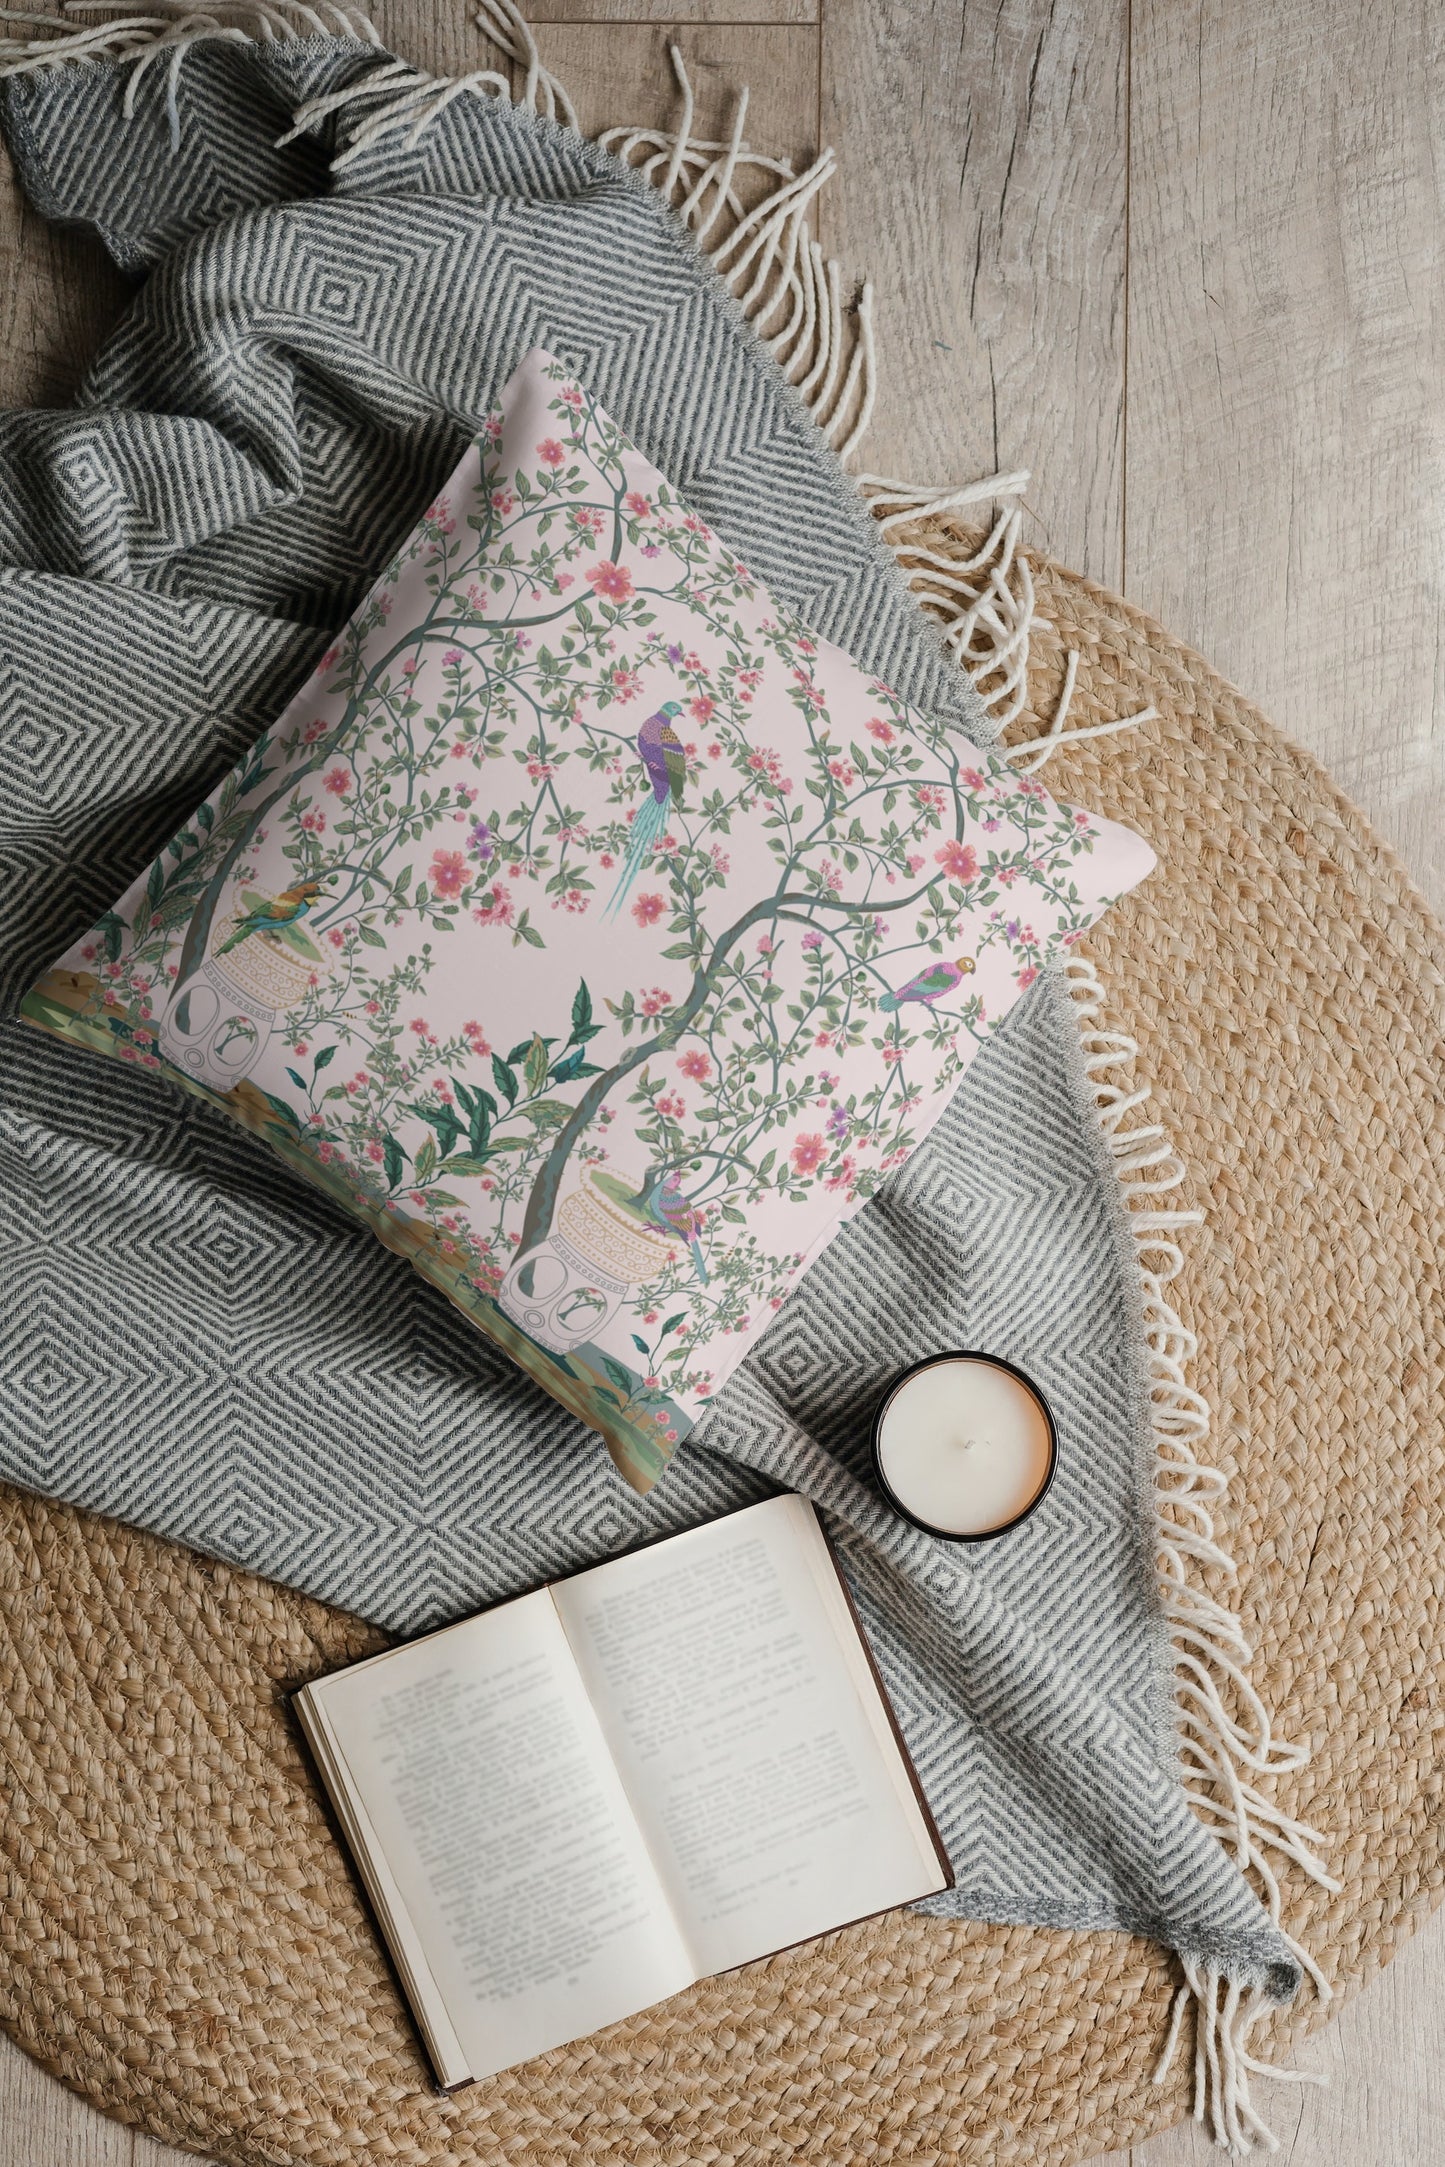 Chinoiserie Cotton Pillows Blush Pink Floral Garden